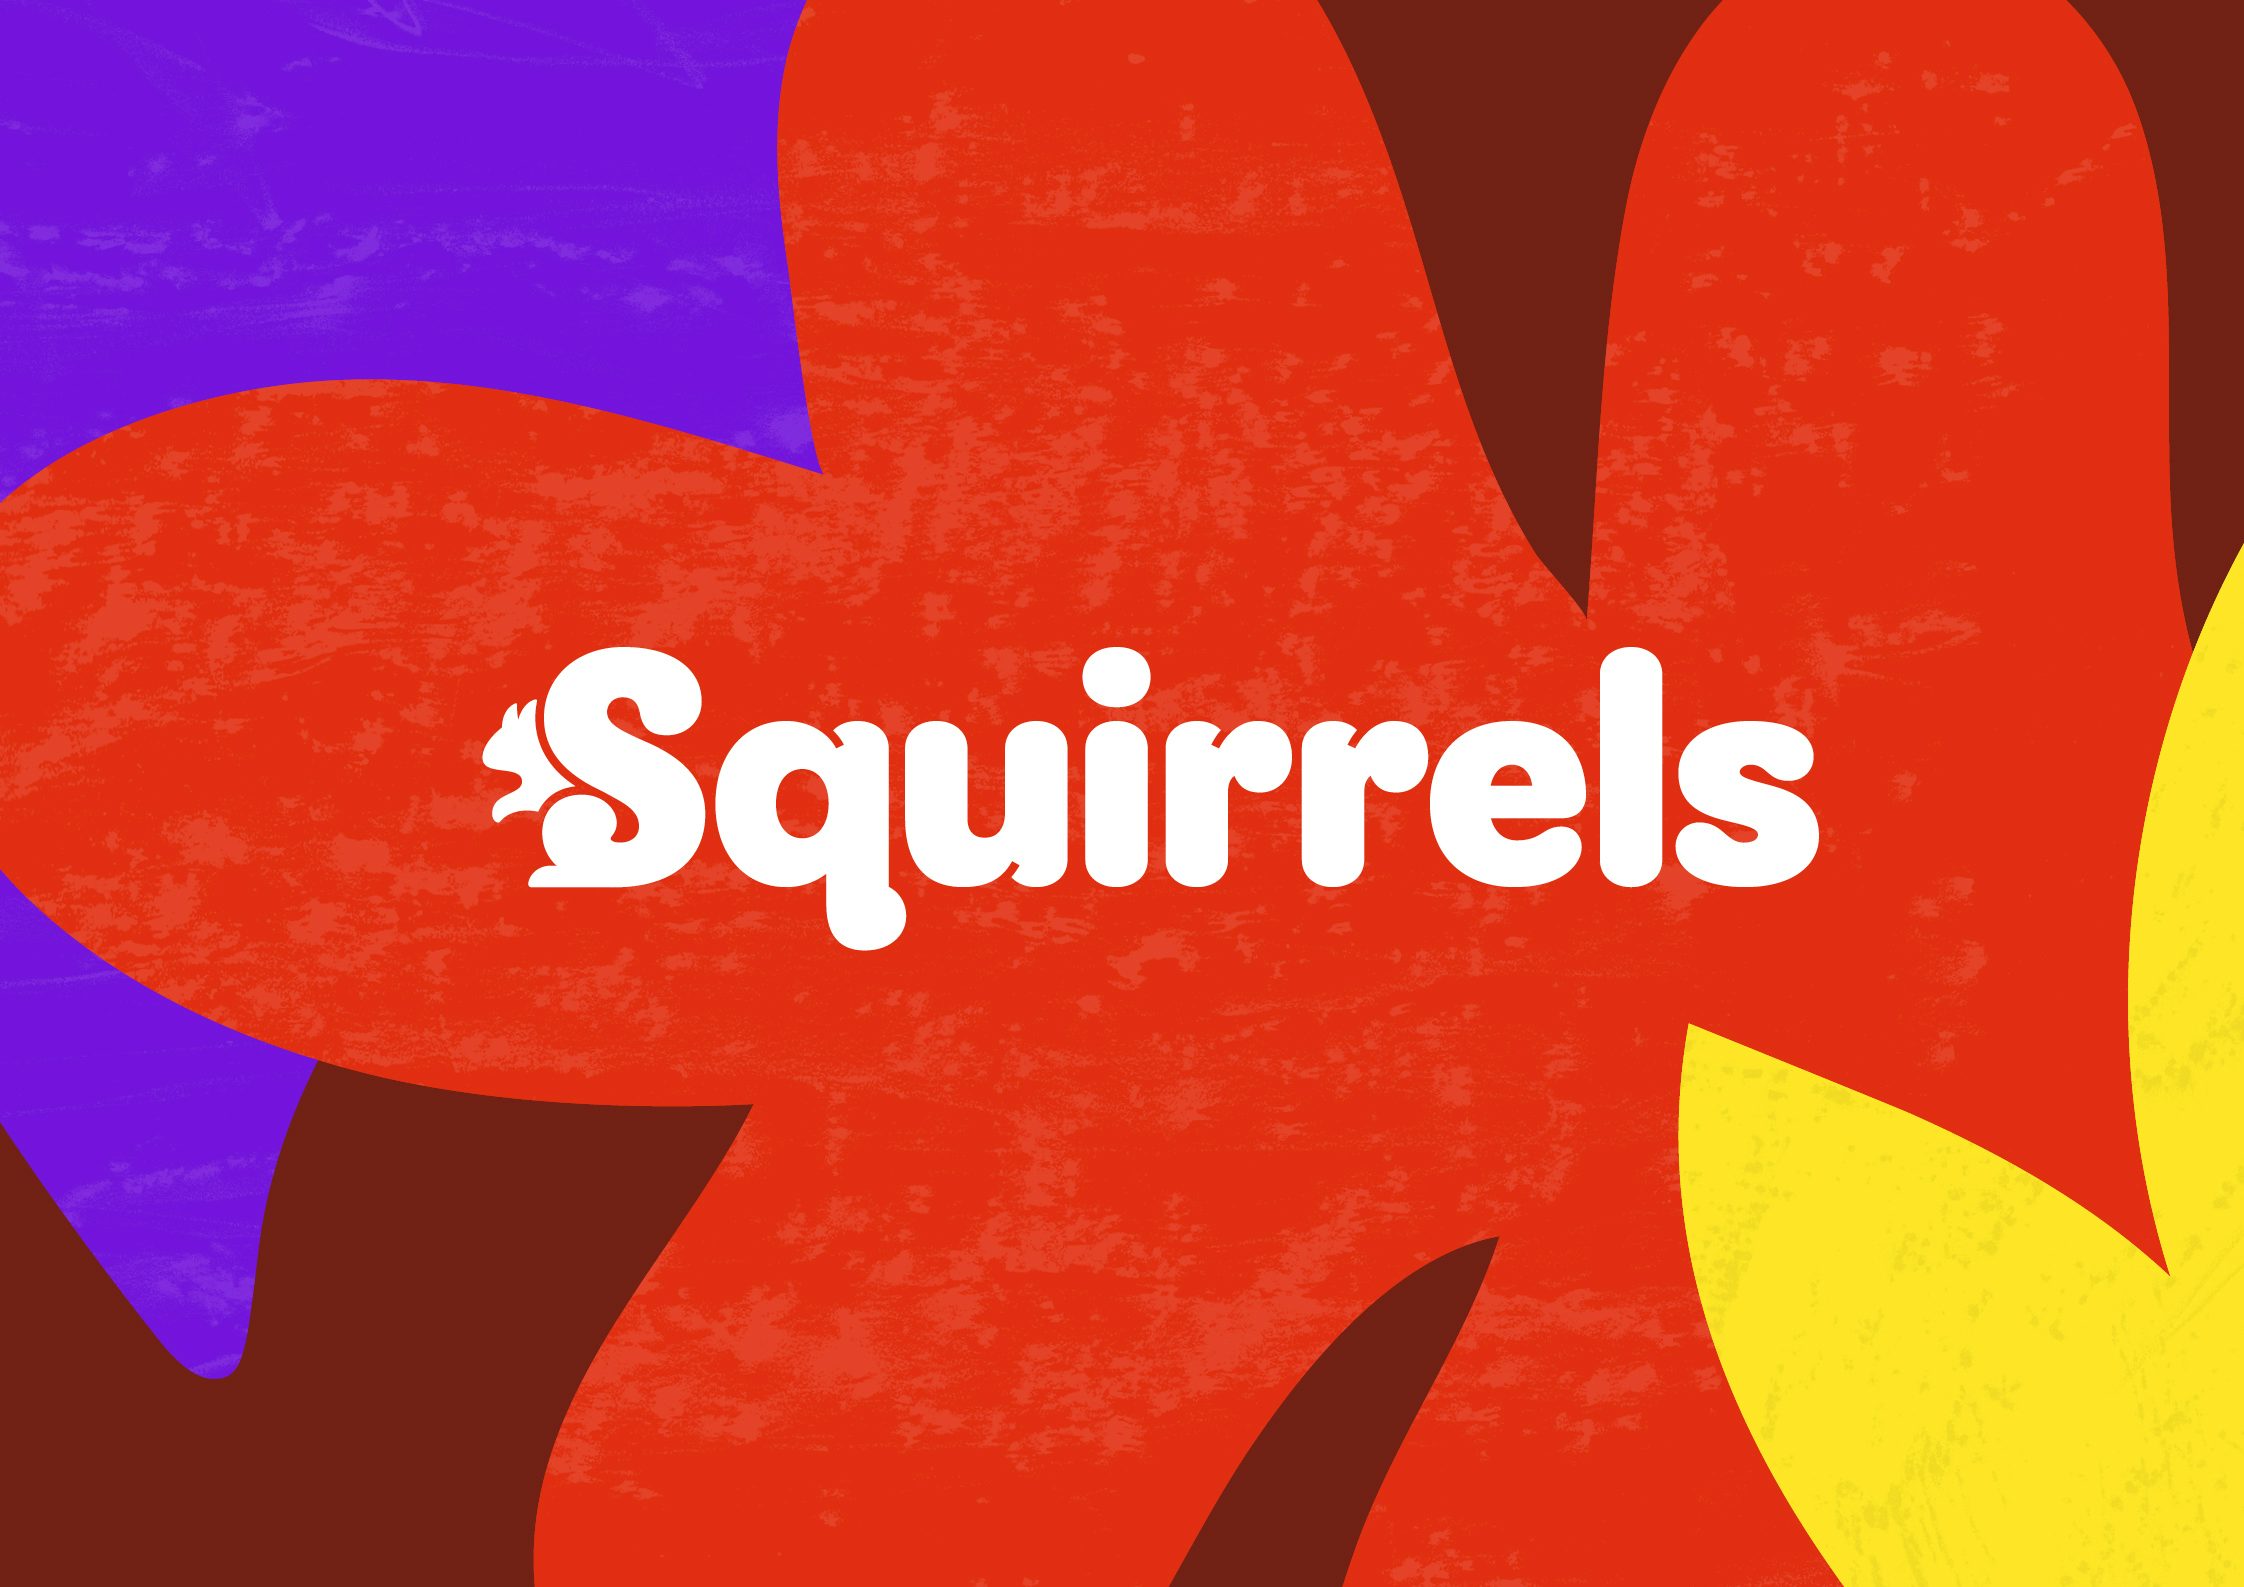 Scouts Squirrels brand identity